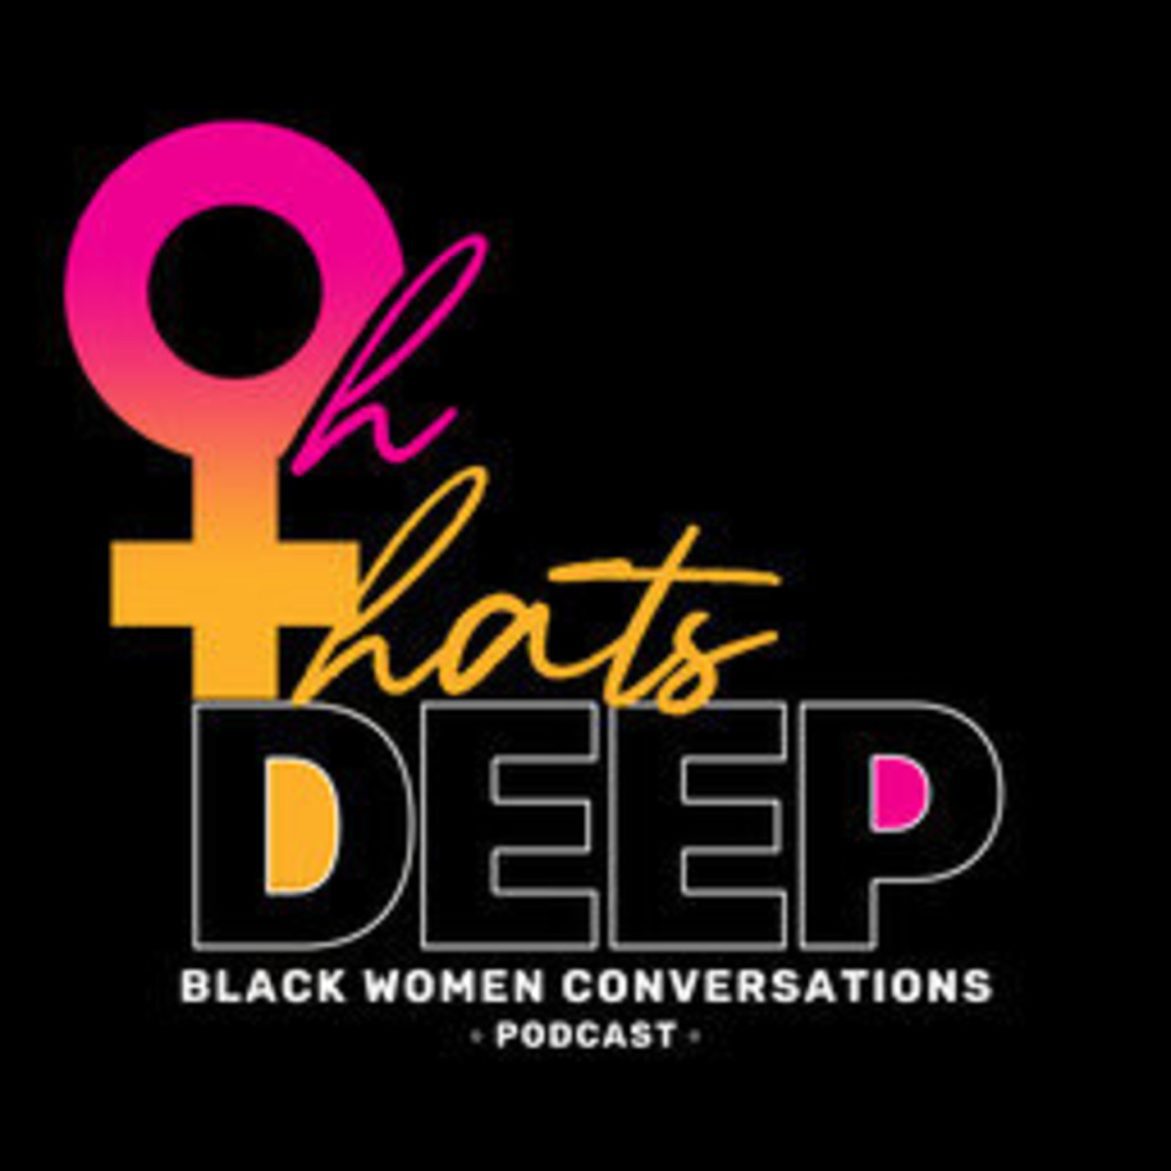 Black Podcasting - Get You A Good Job